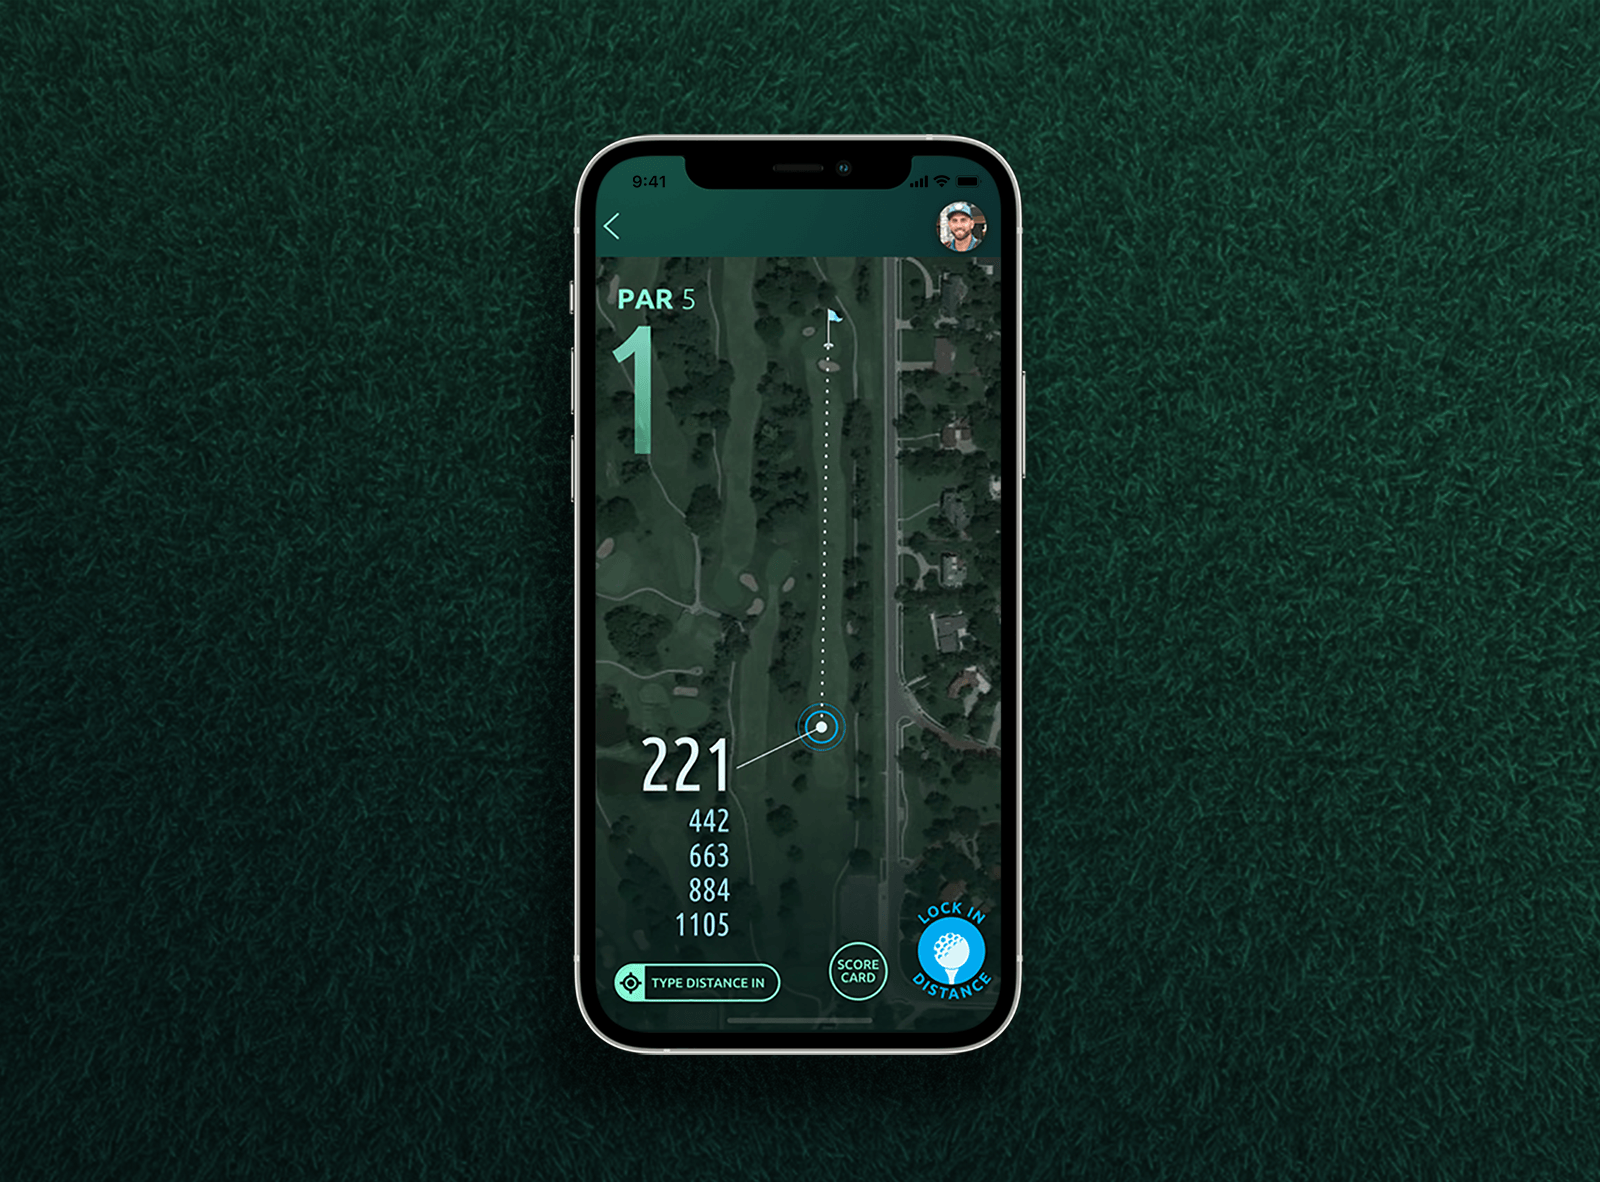 parpoints golf app on grass